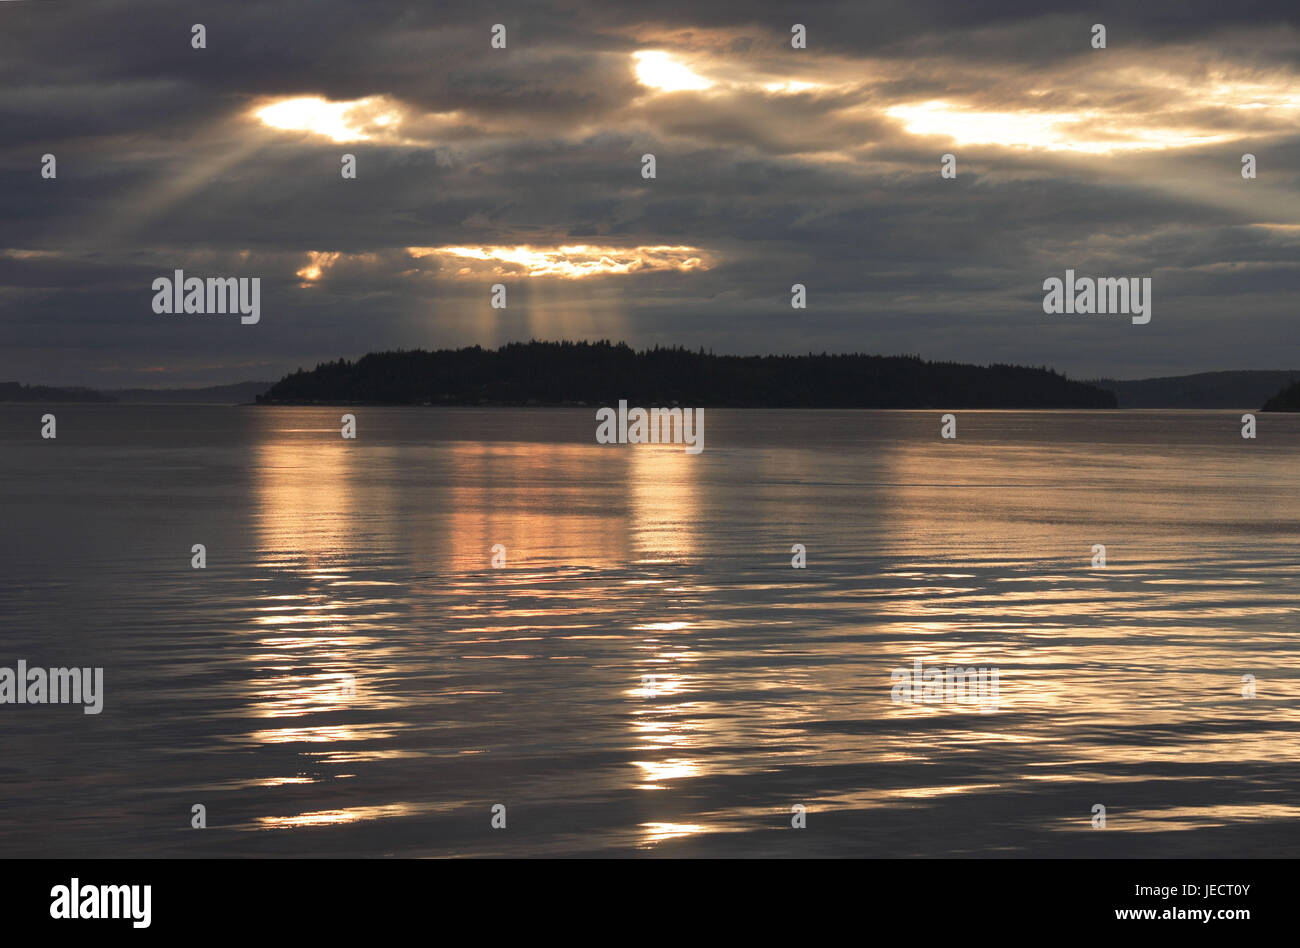 Canada, British Columbia, Vancouver Iceland, Johnstone Strait, clouds, the sun, silhouette, drama, Stock Photo